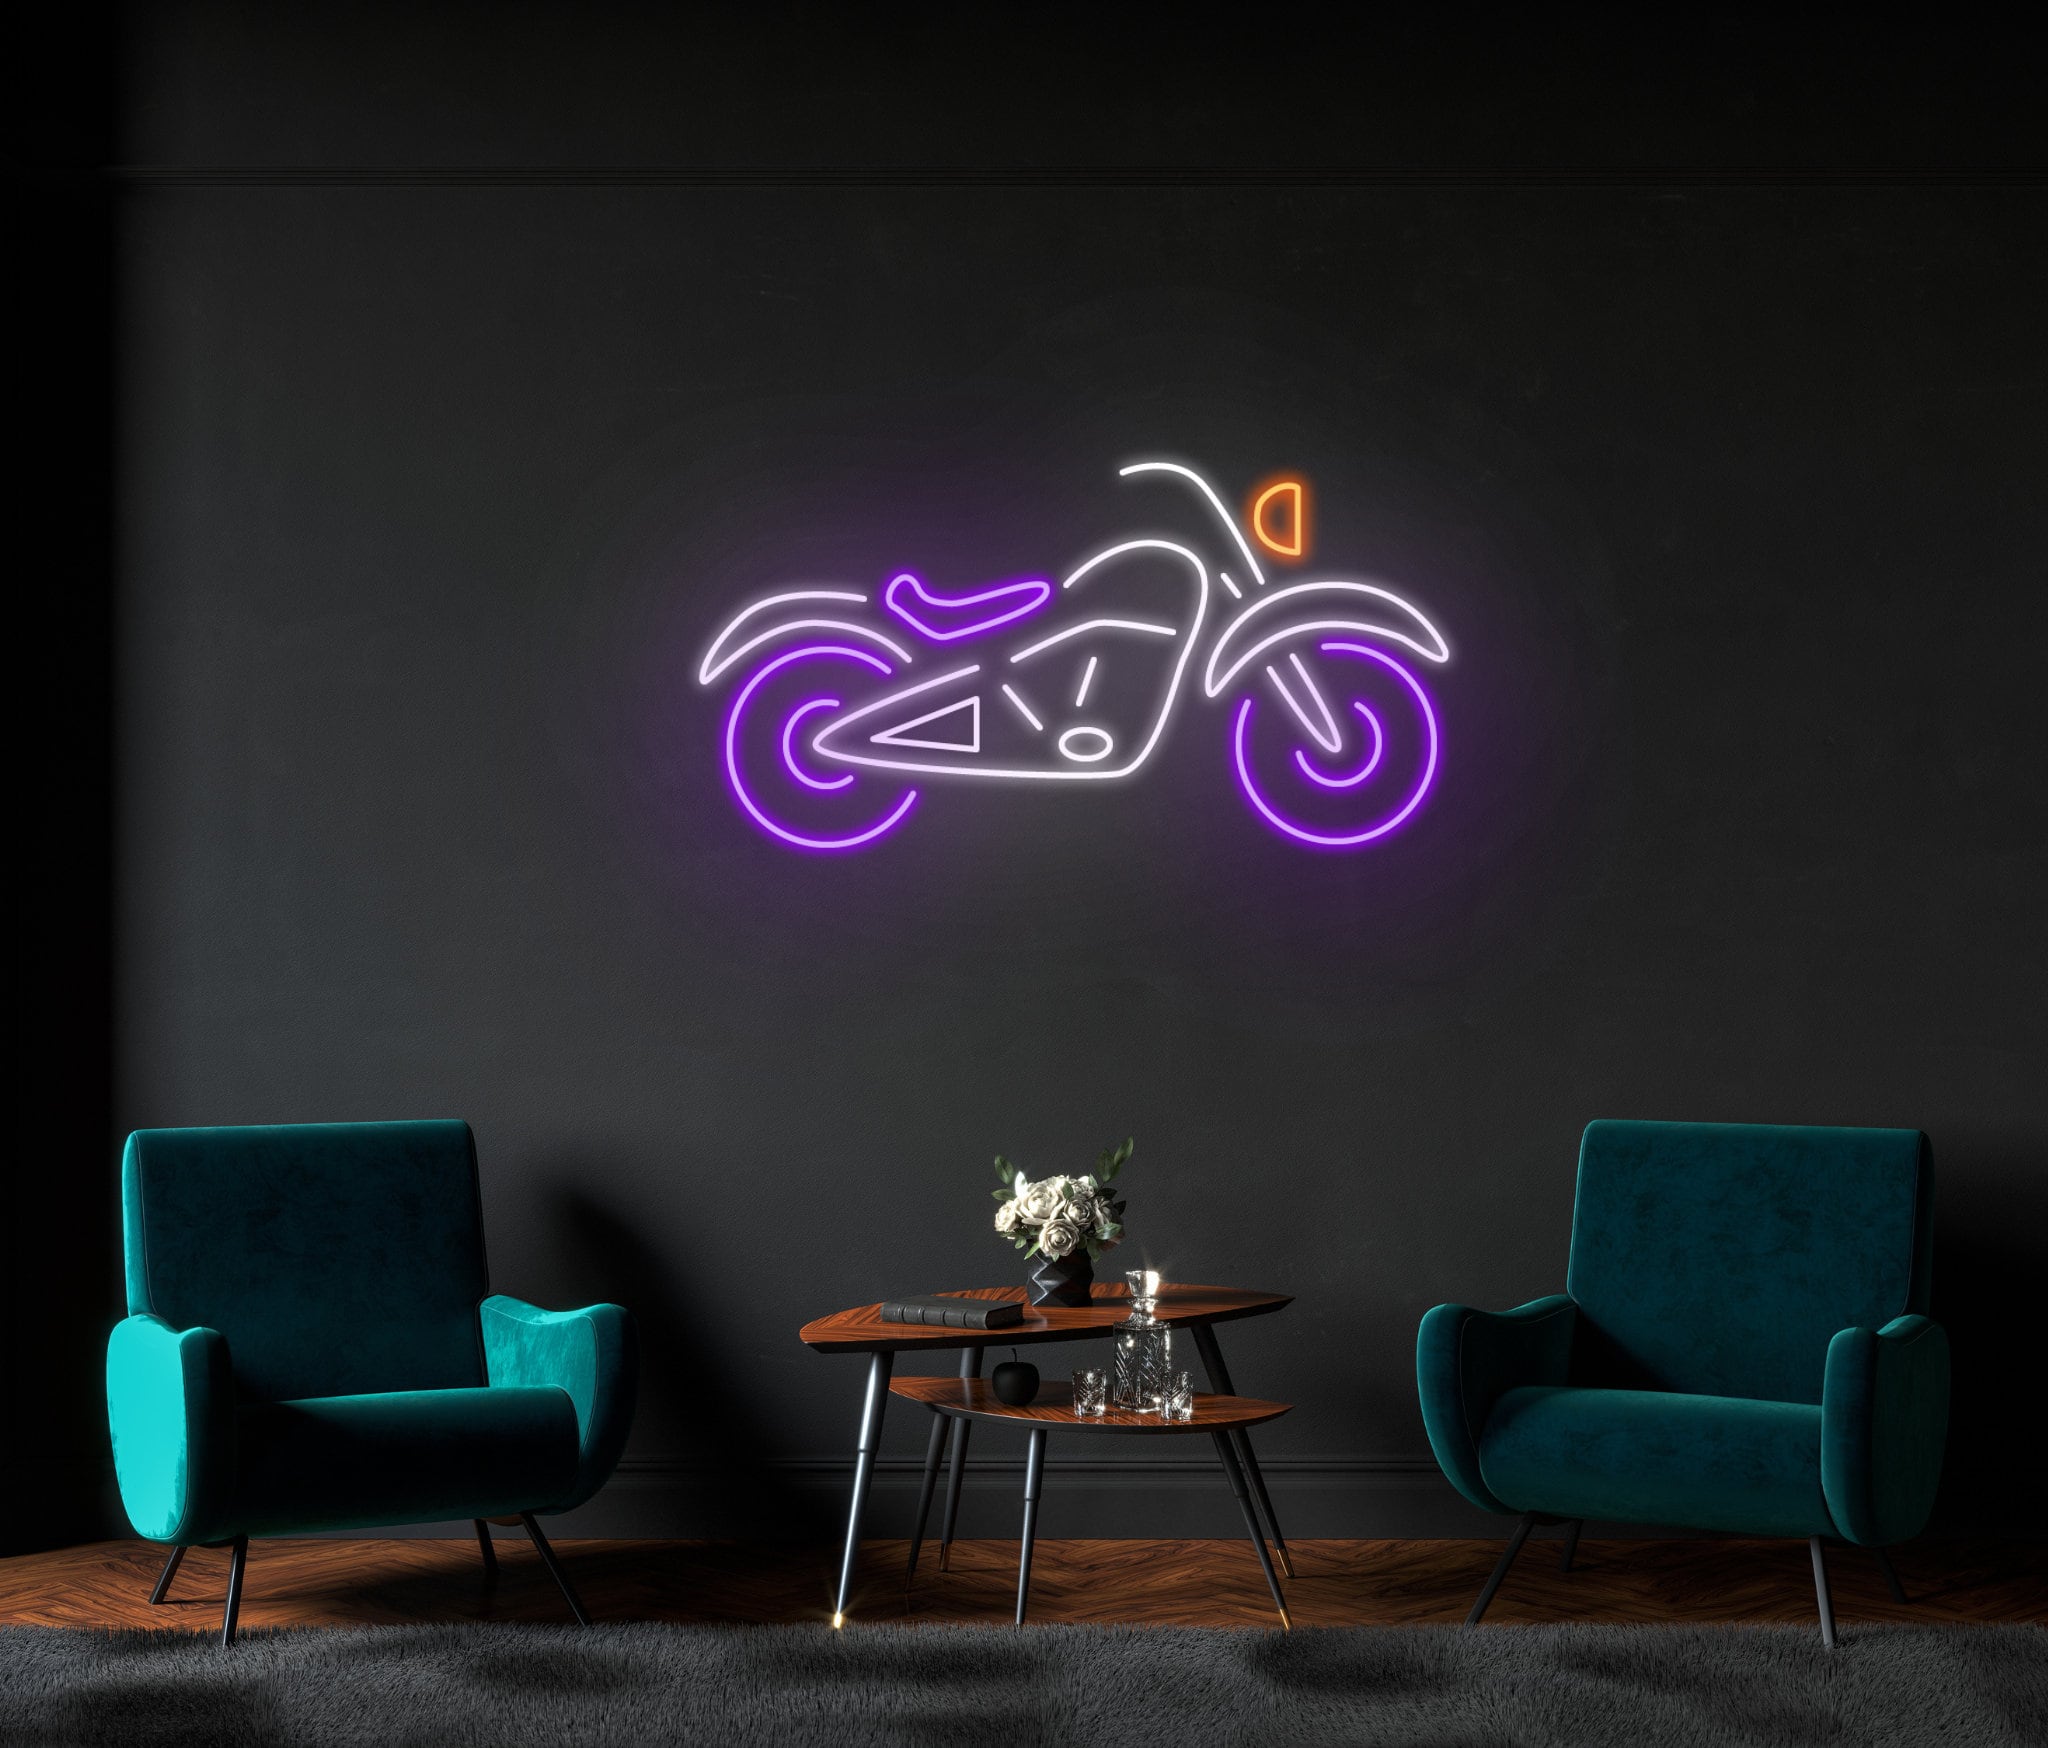 Motorcycle led sign - .de